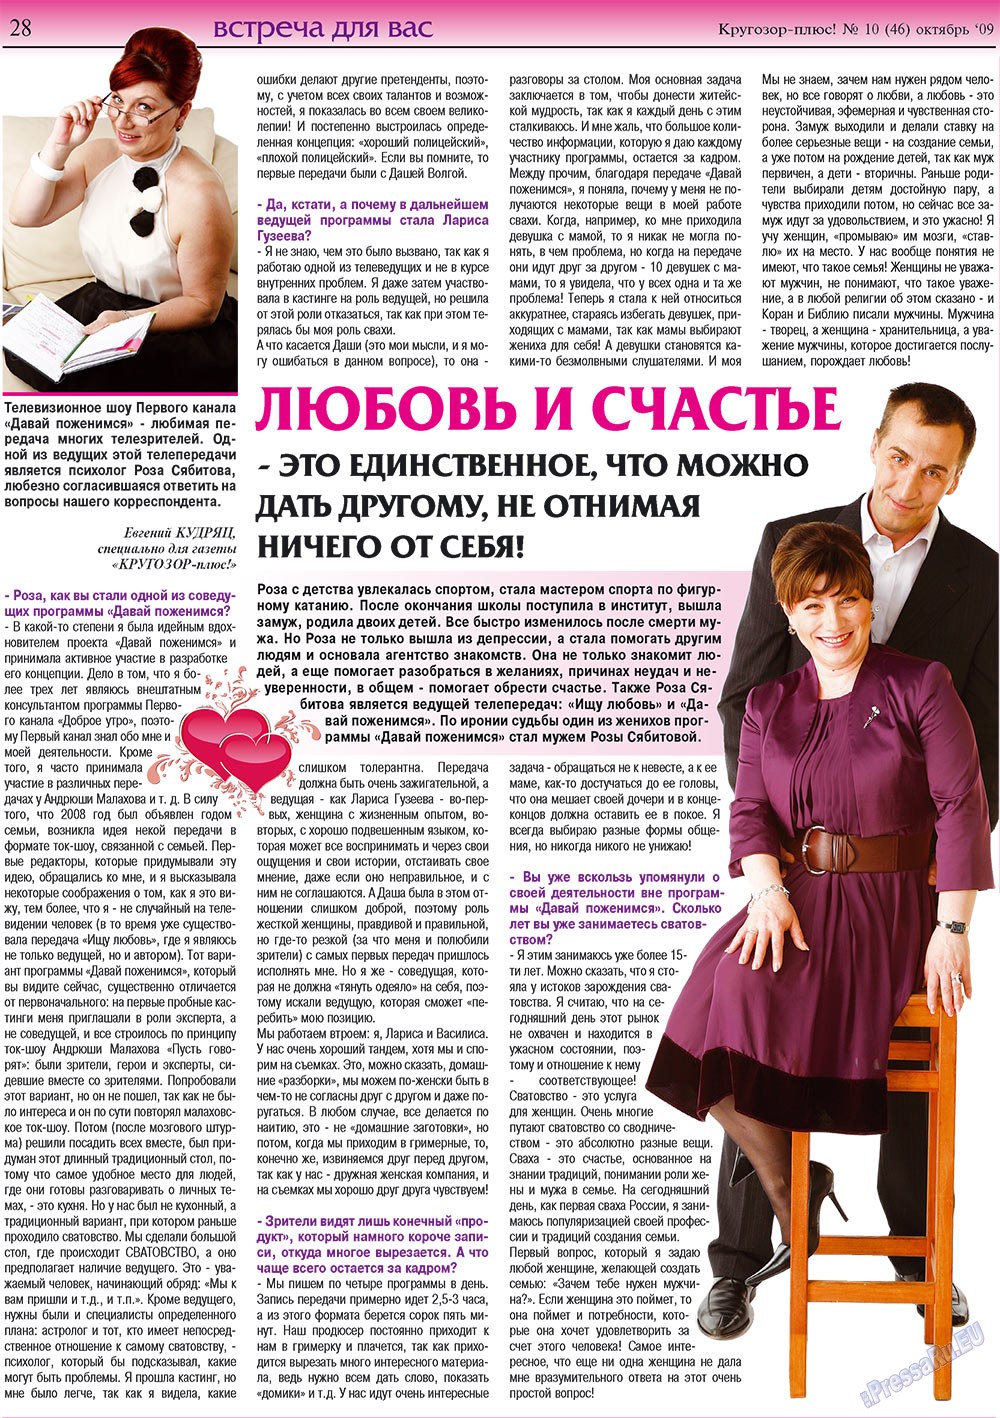 Кругозор плюс! (газета). 2009 год, номер 10, стр. 28